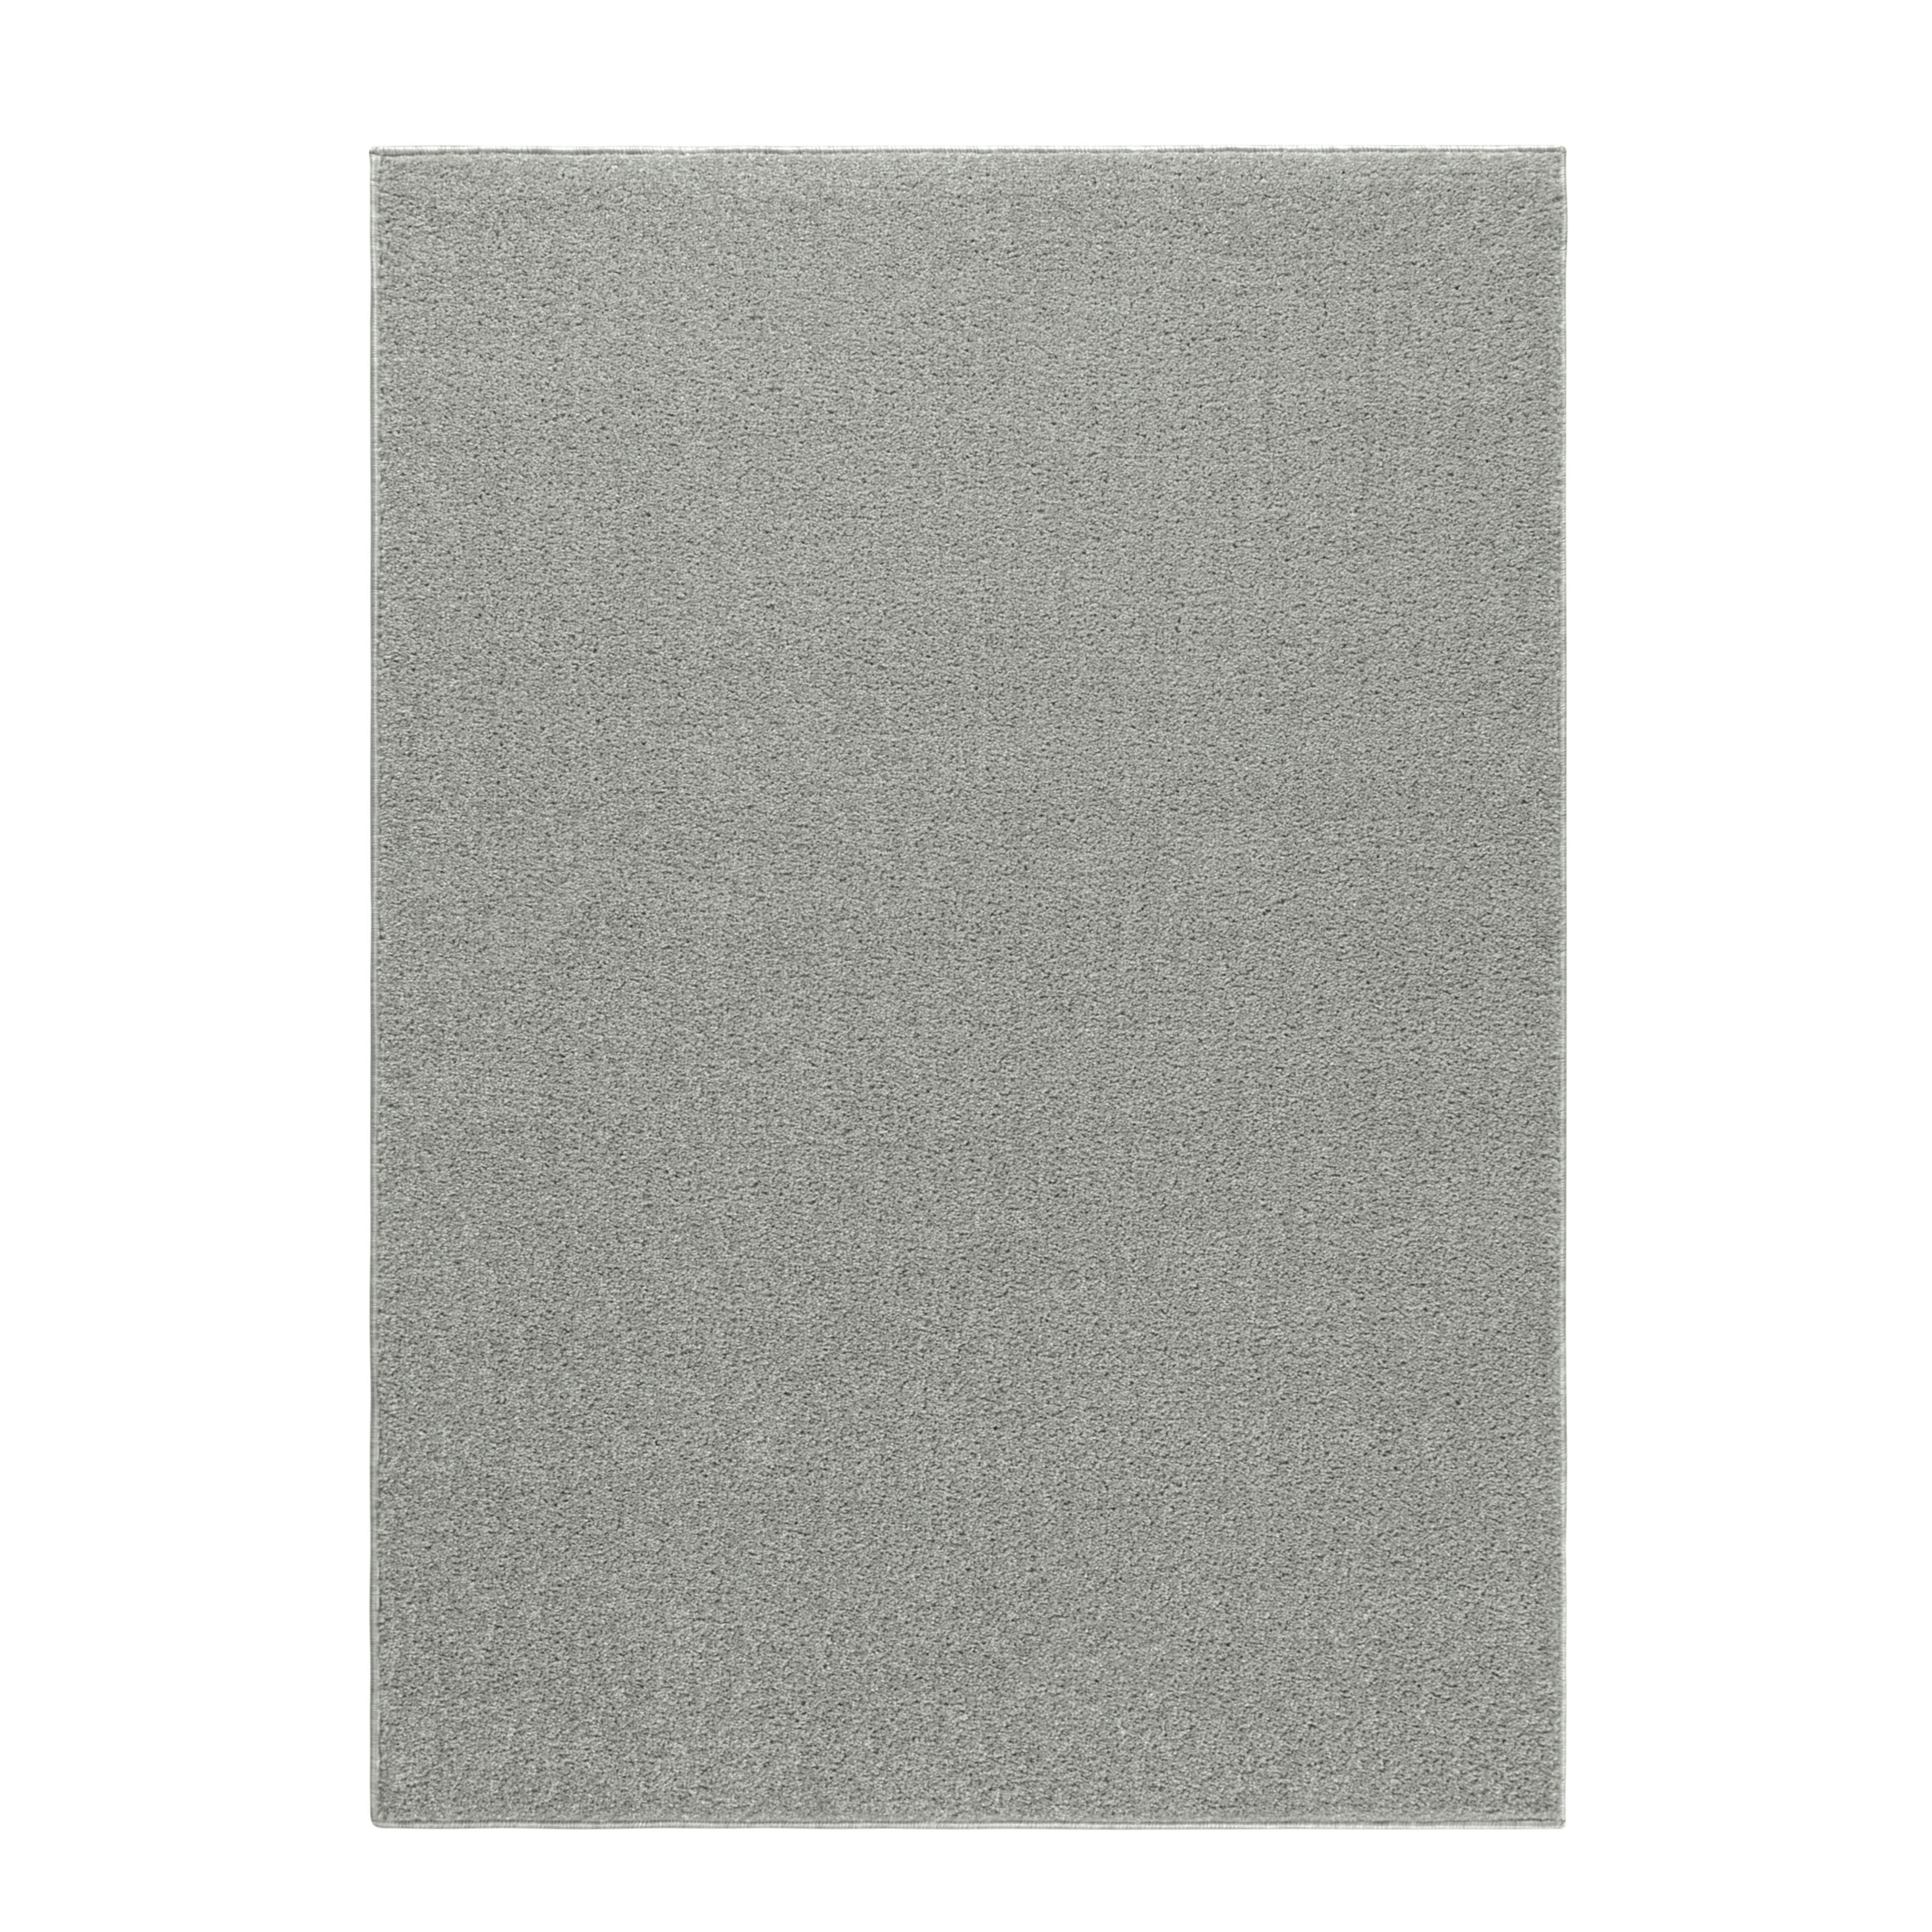 WEBTEPPICH 200/290 cm Ata  - Creme, Basics, Textil (200/290cm) - Novel